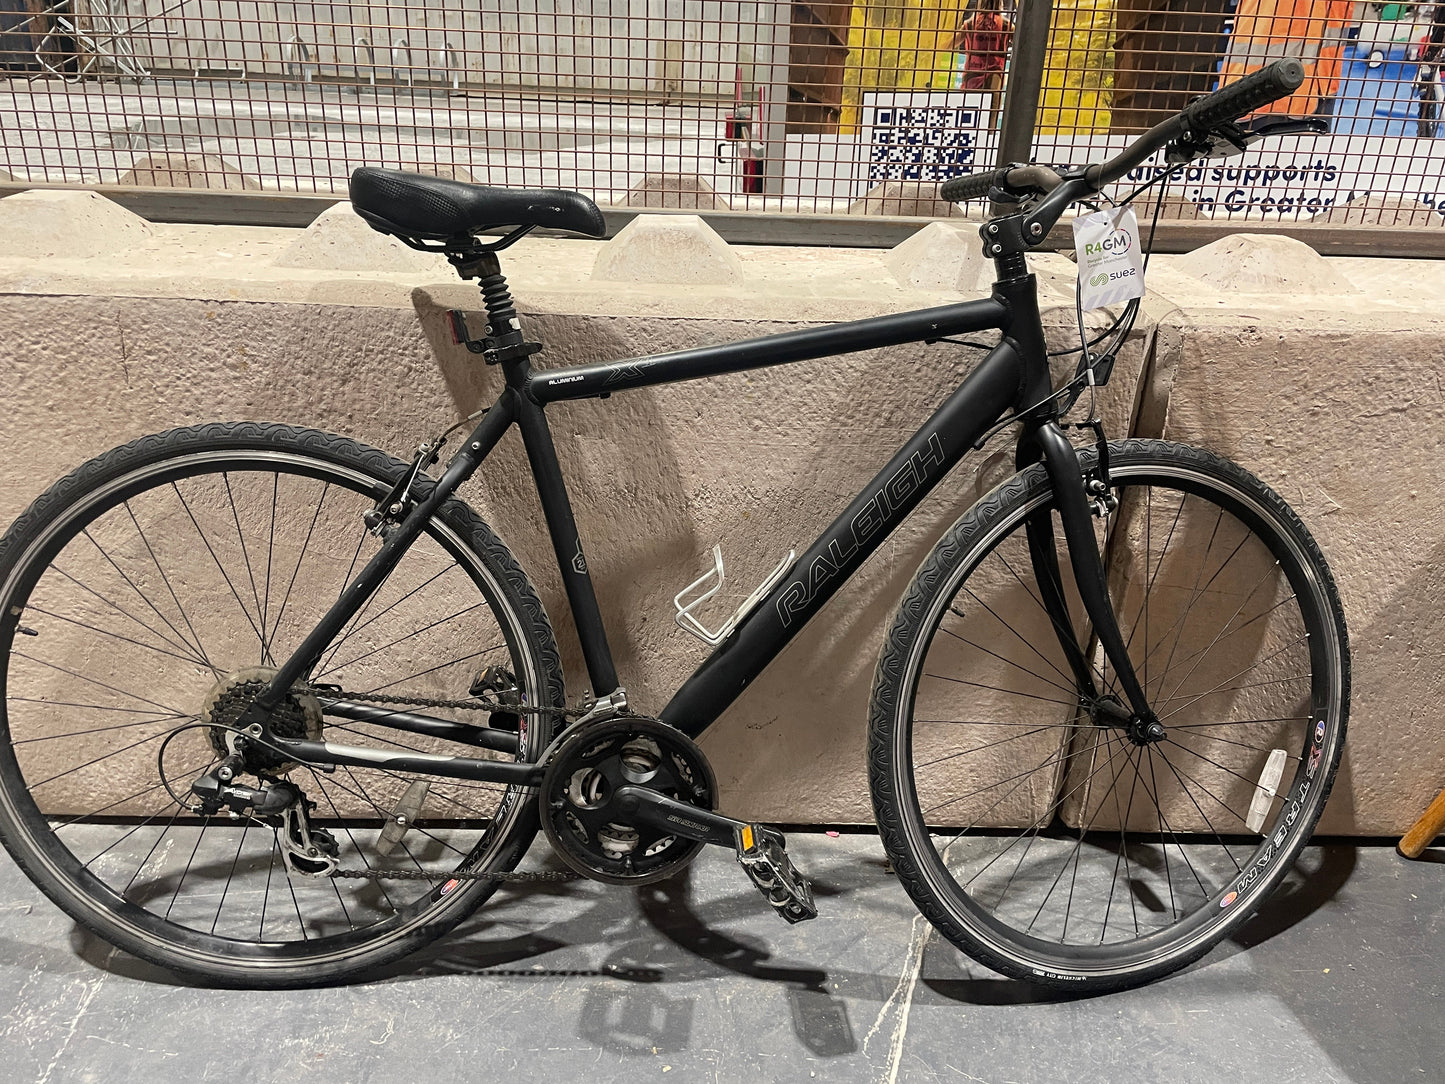 Serviced Raleigh bike 700 c wheel 54cm frame Black (pre-loved) Renew Greater Manchester